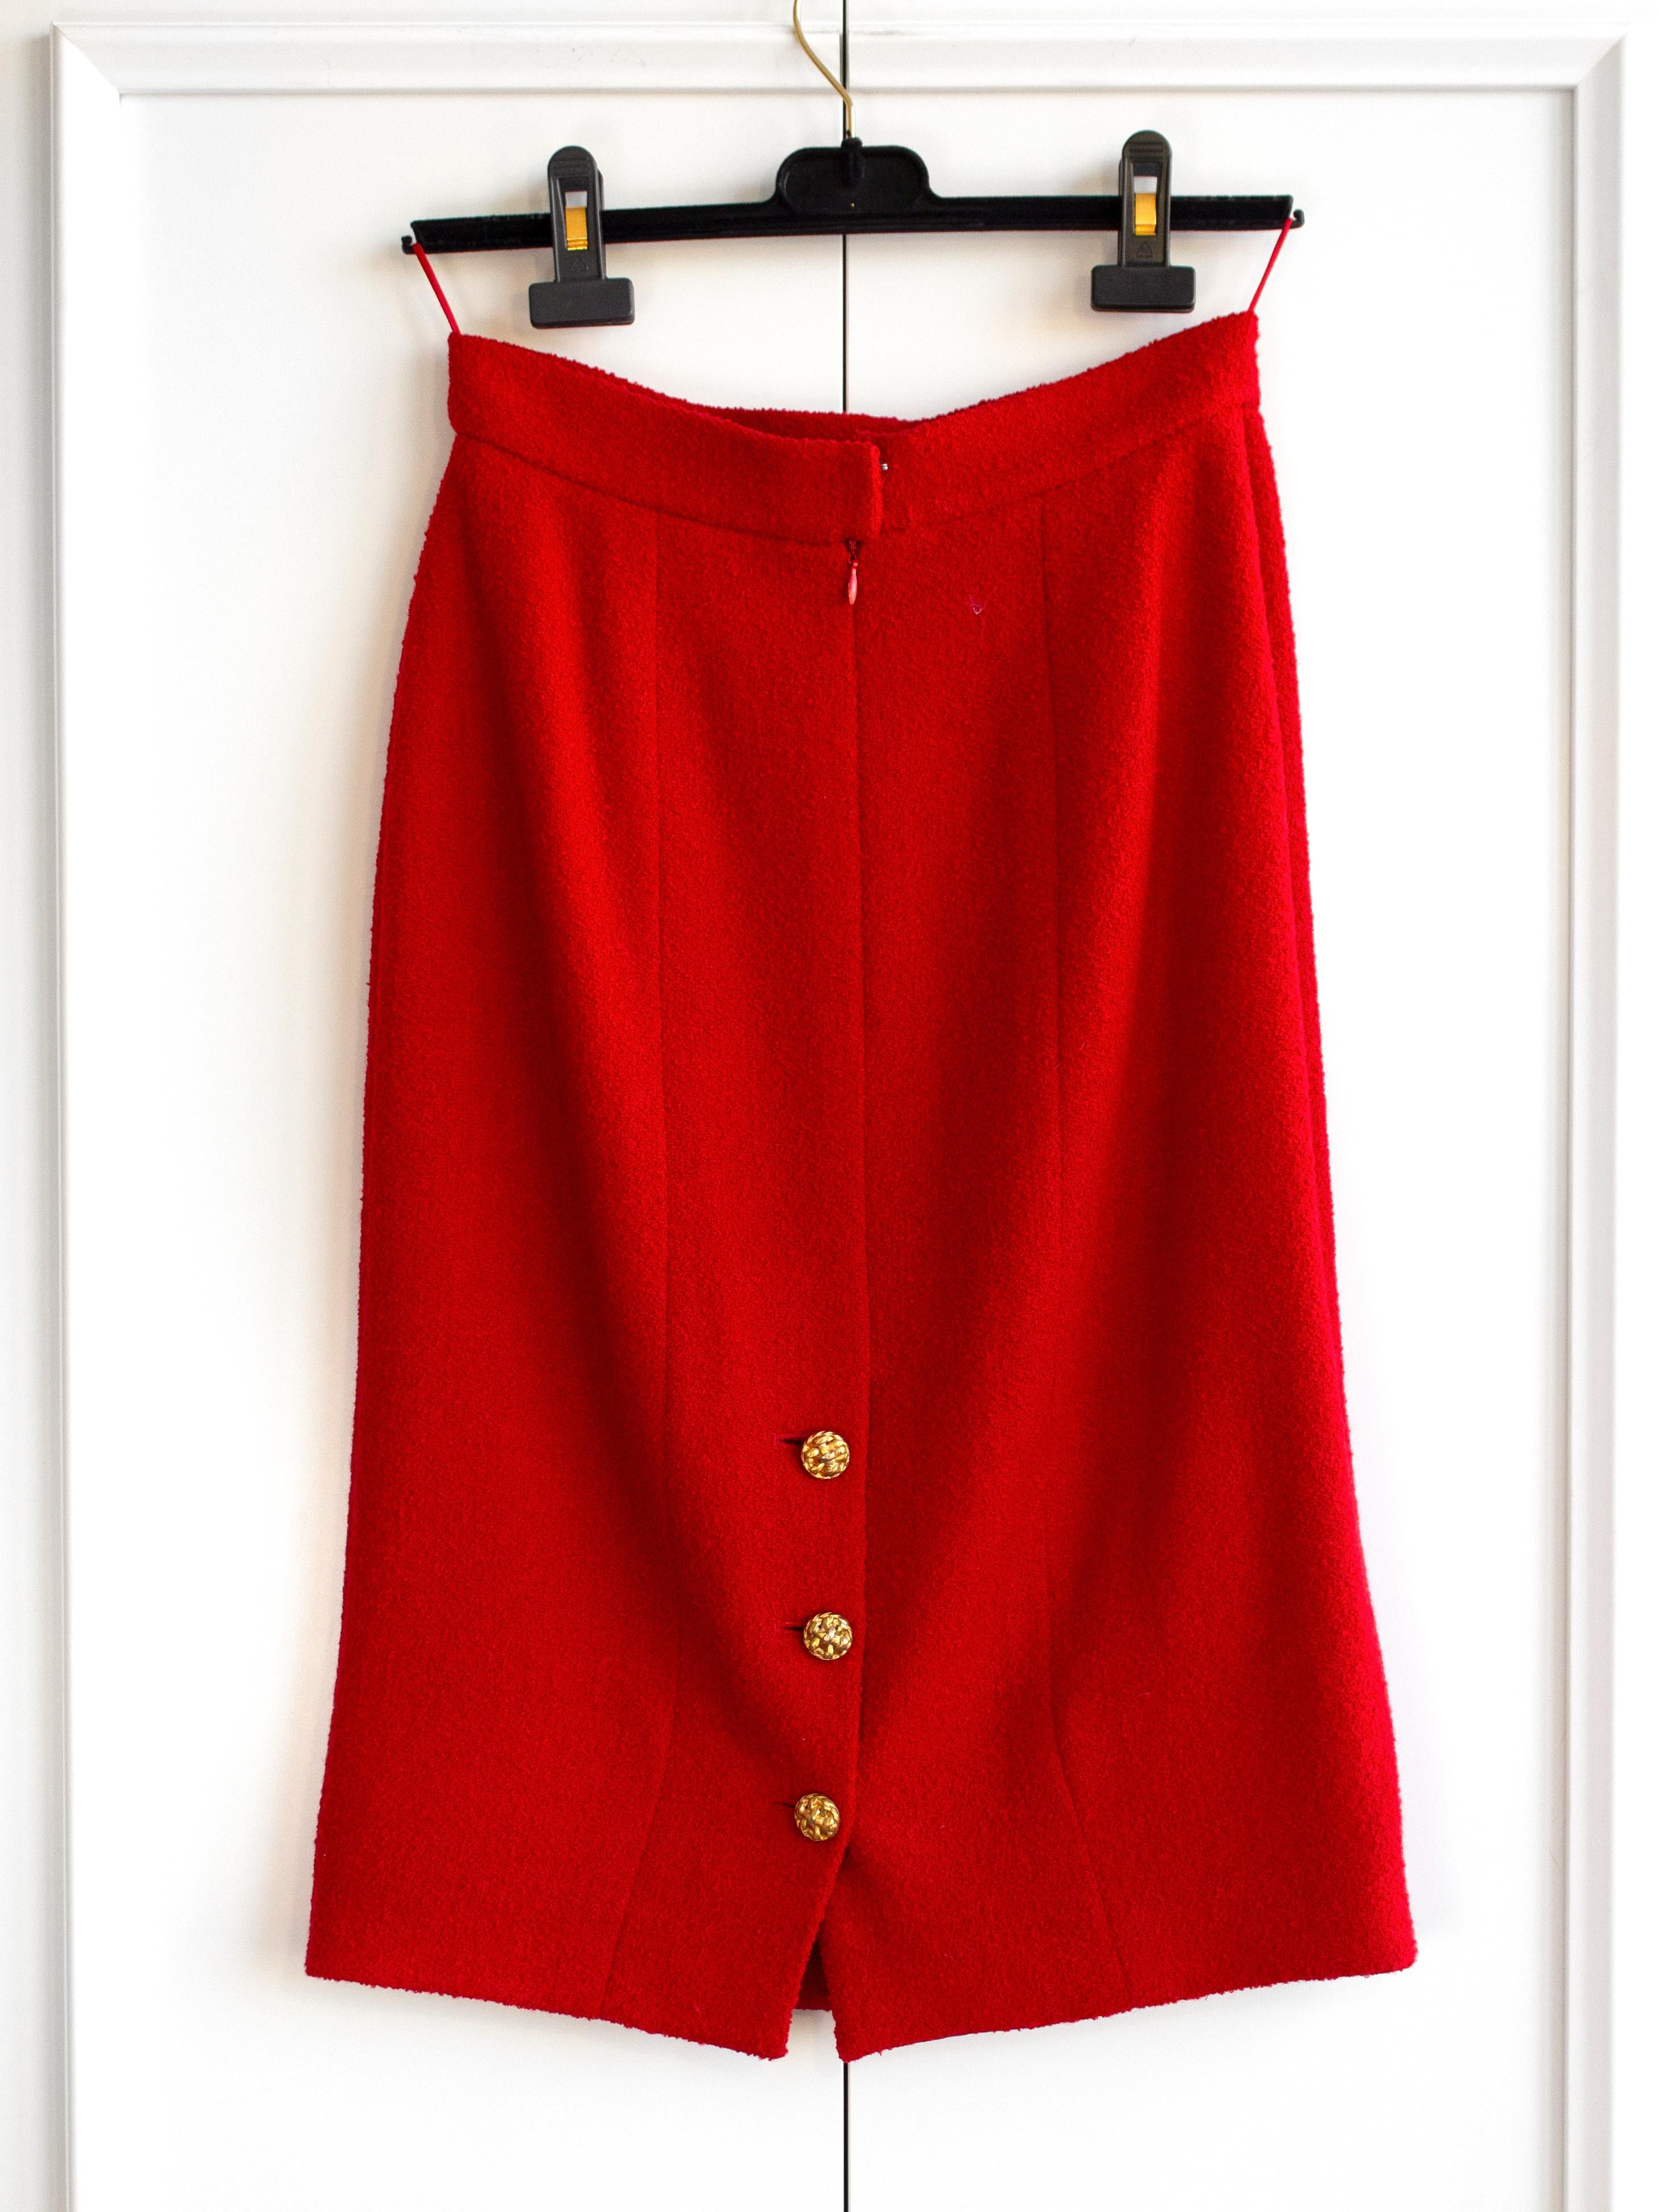 Chanel Vintage Fall/Winter 1992 Runway Parisian Red Gold Tweed Jacket Skirt Suit 12